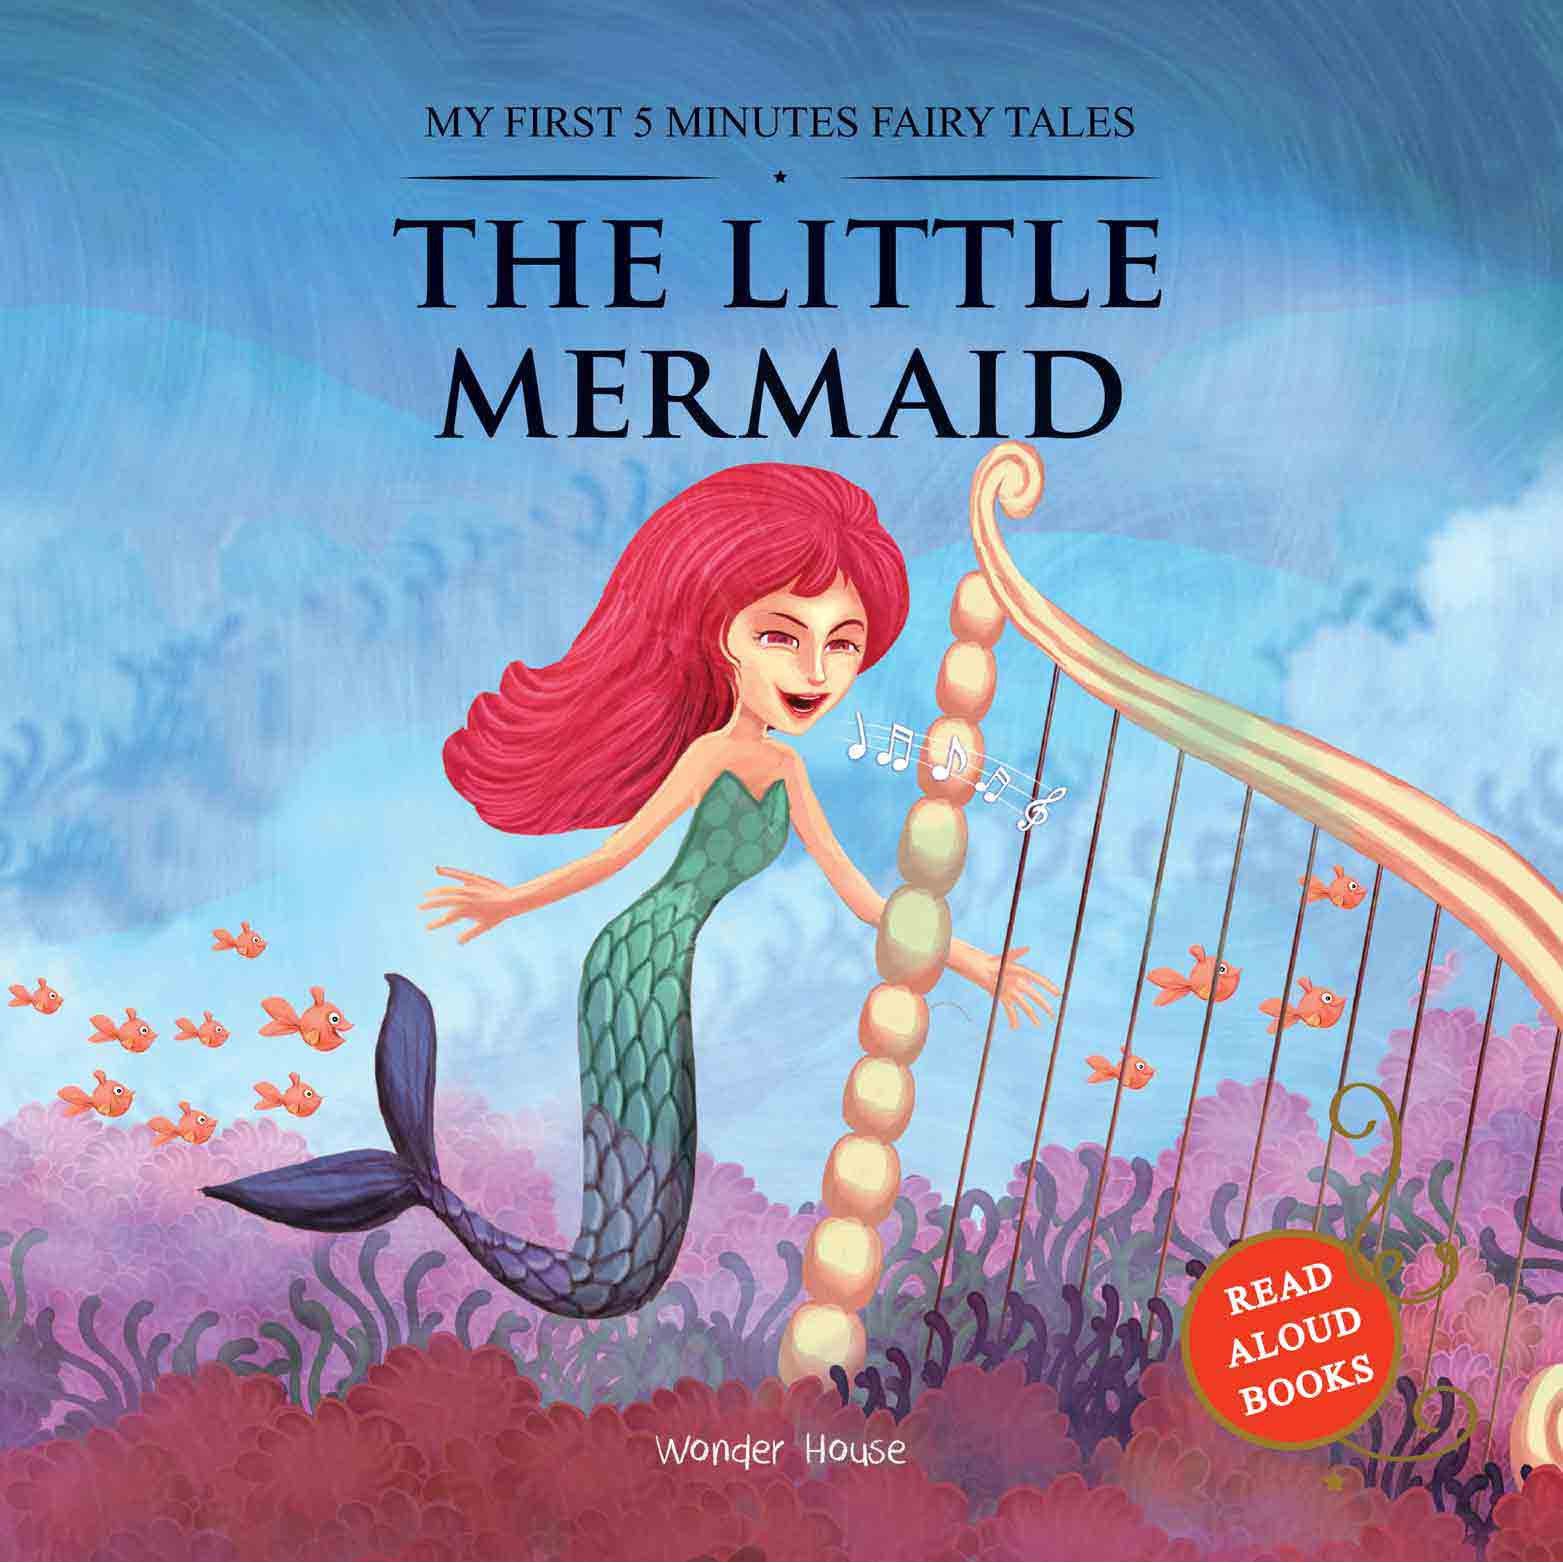 The little mermaid fairy tales - daxmondo